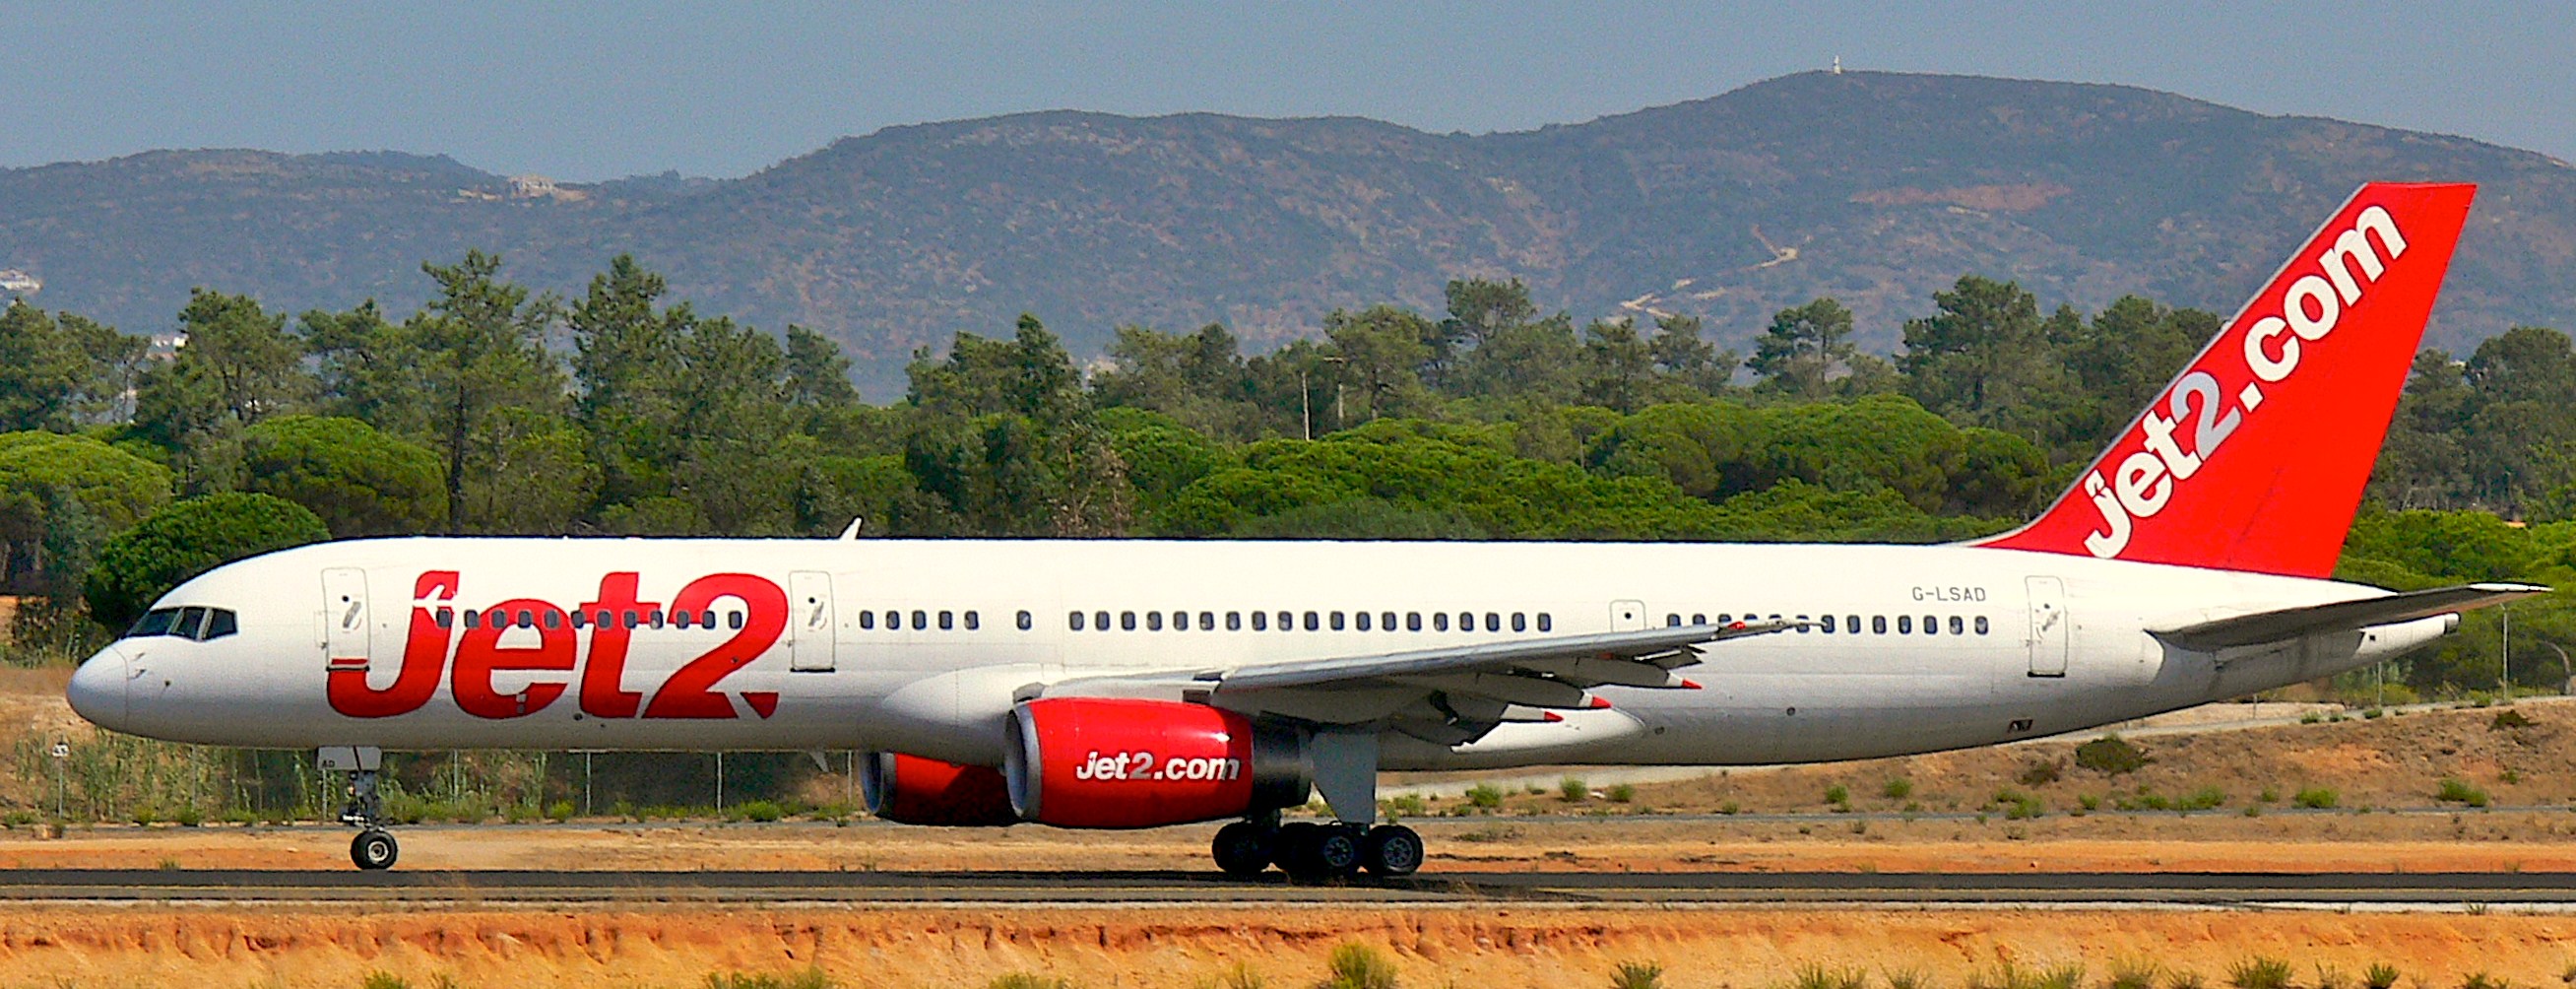 Jet2-757-faro